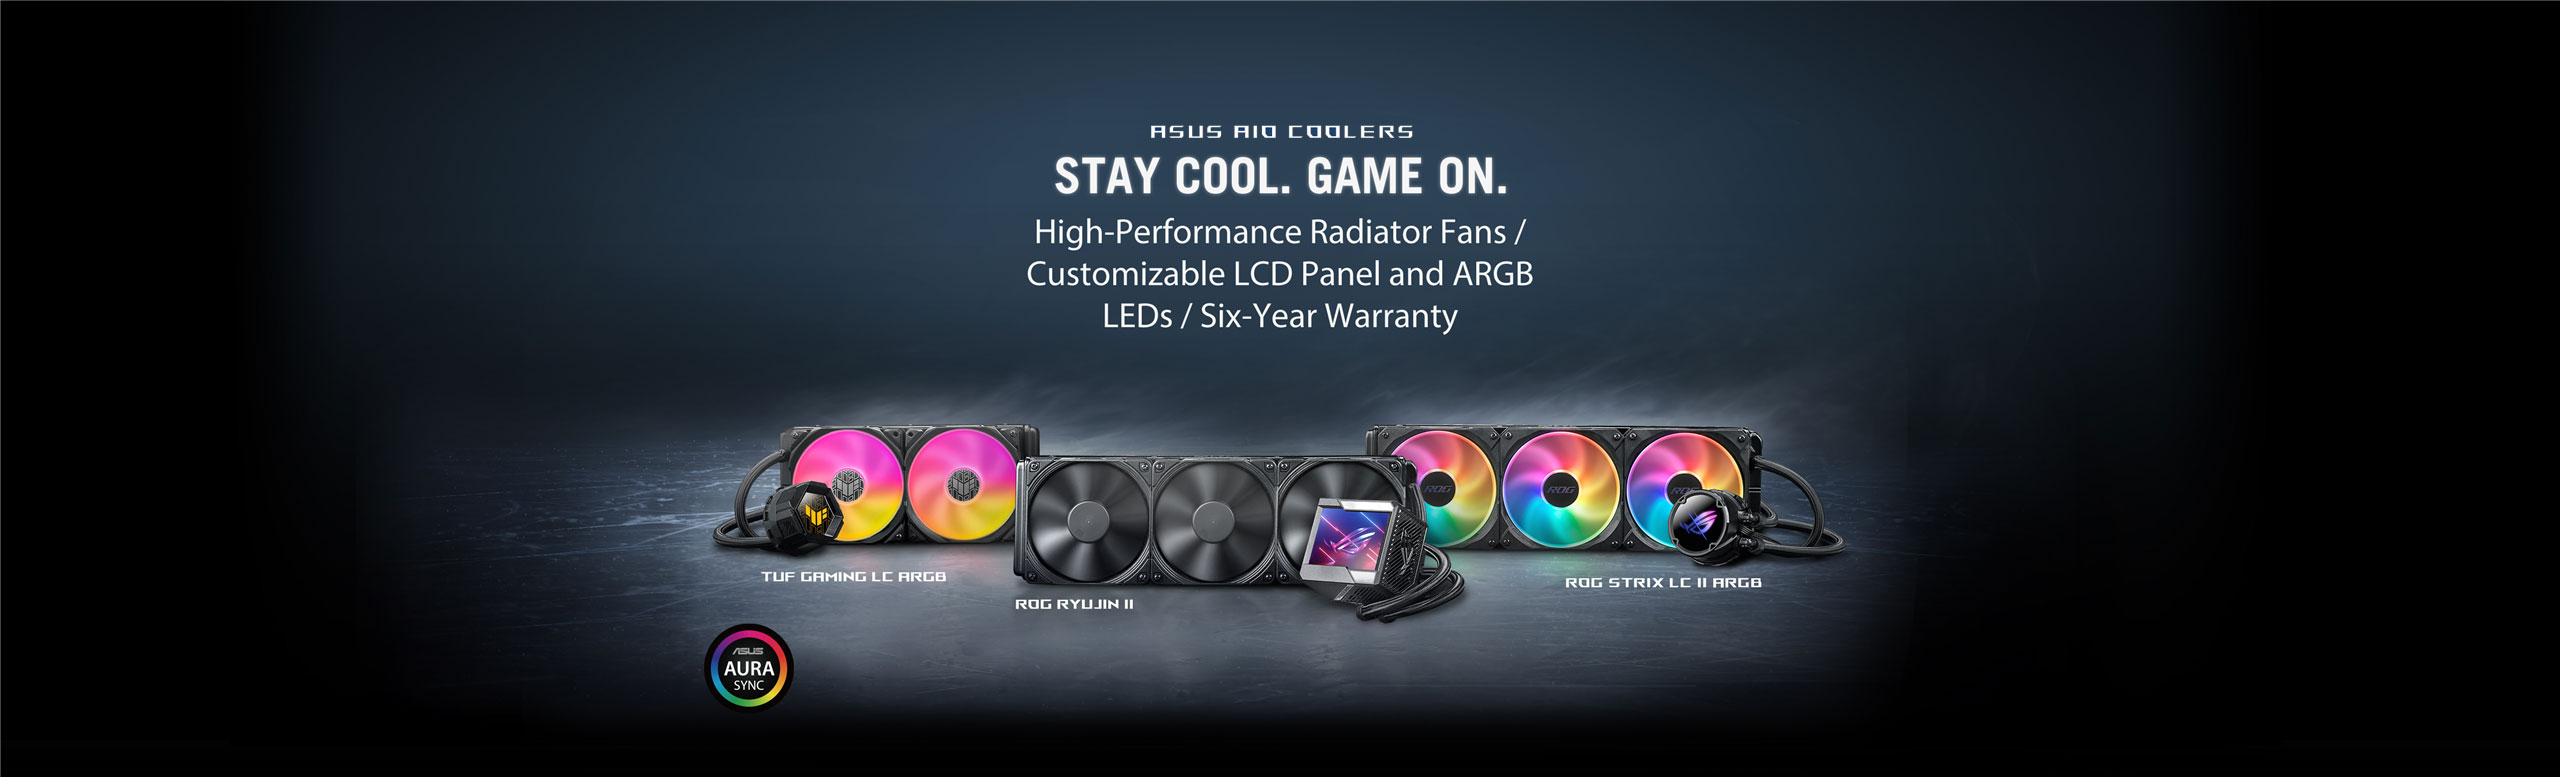 ROG/ROG STRIX/TUF Gaming AIO Coolers